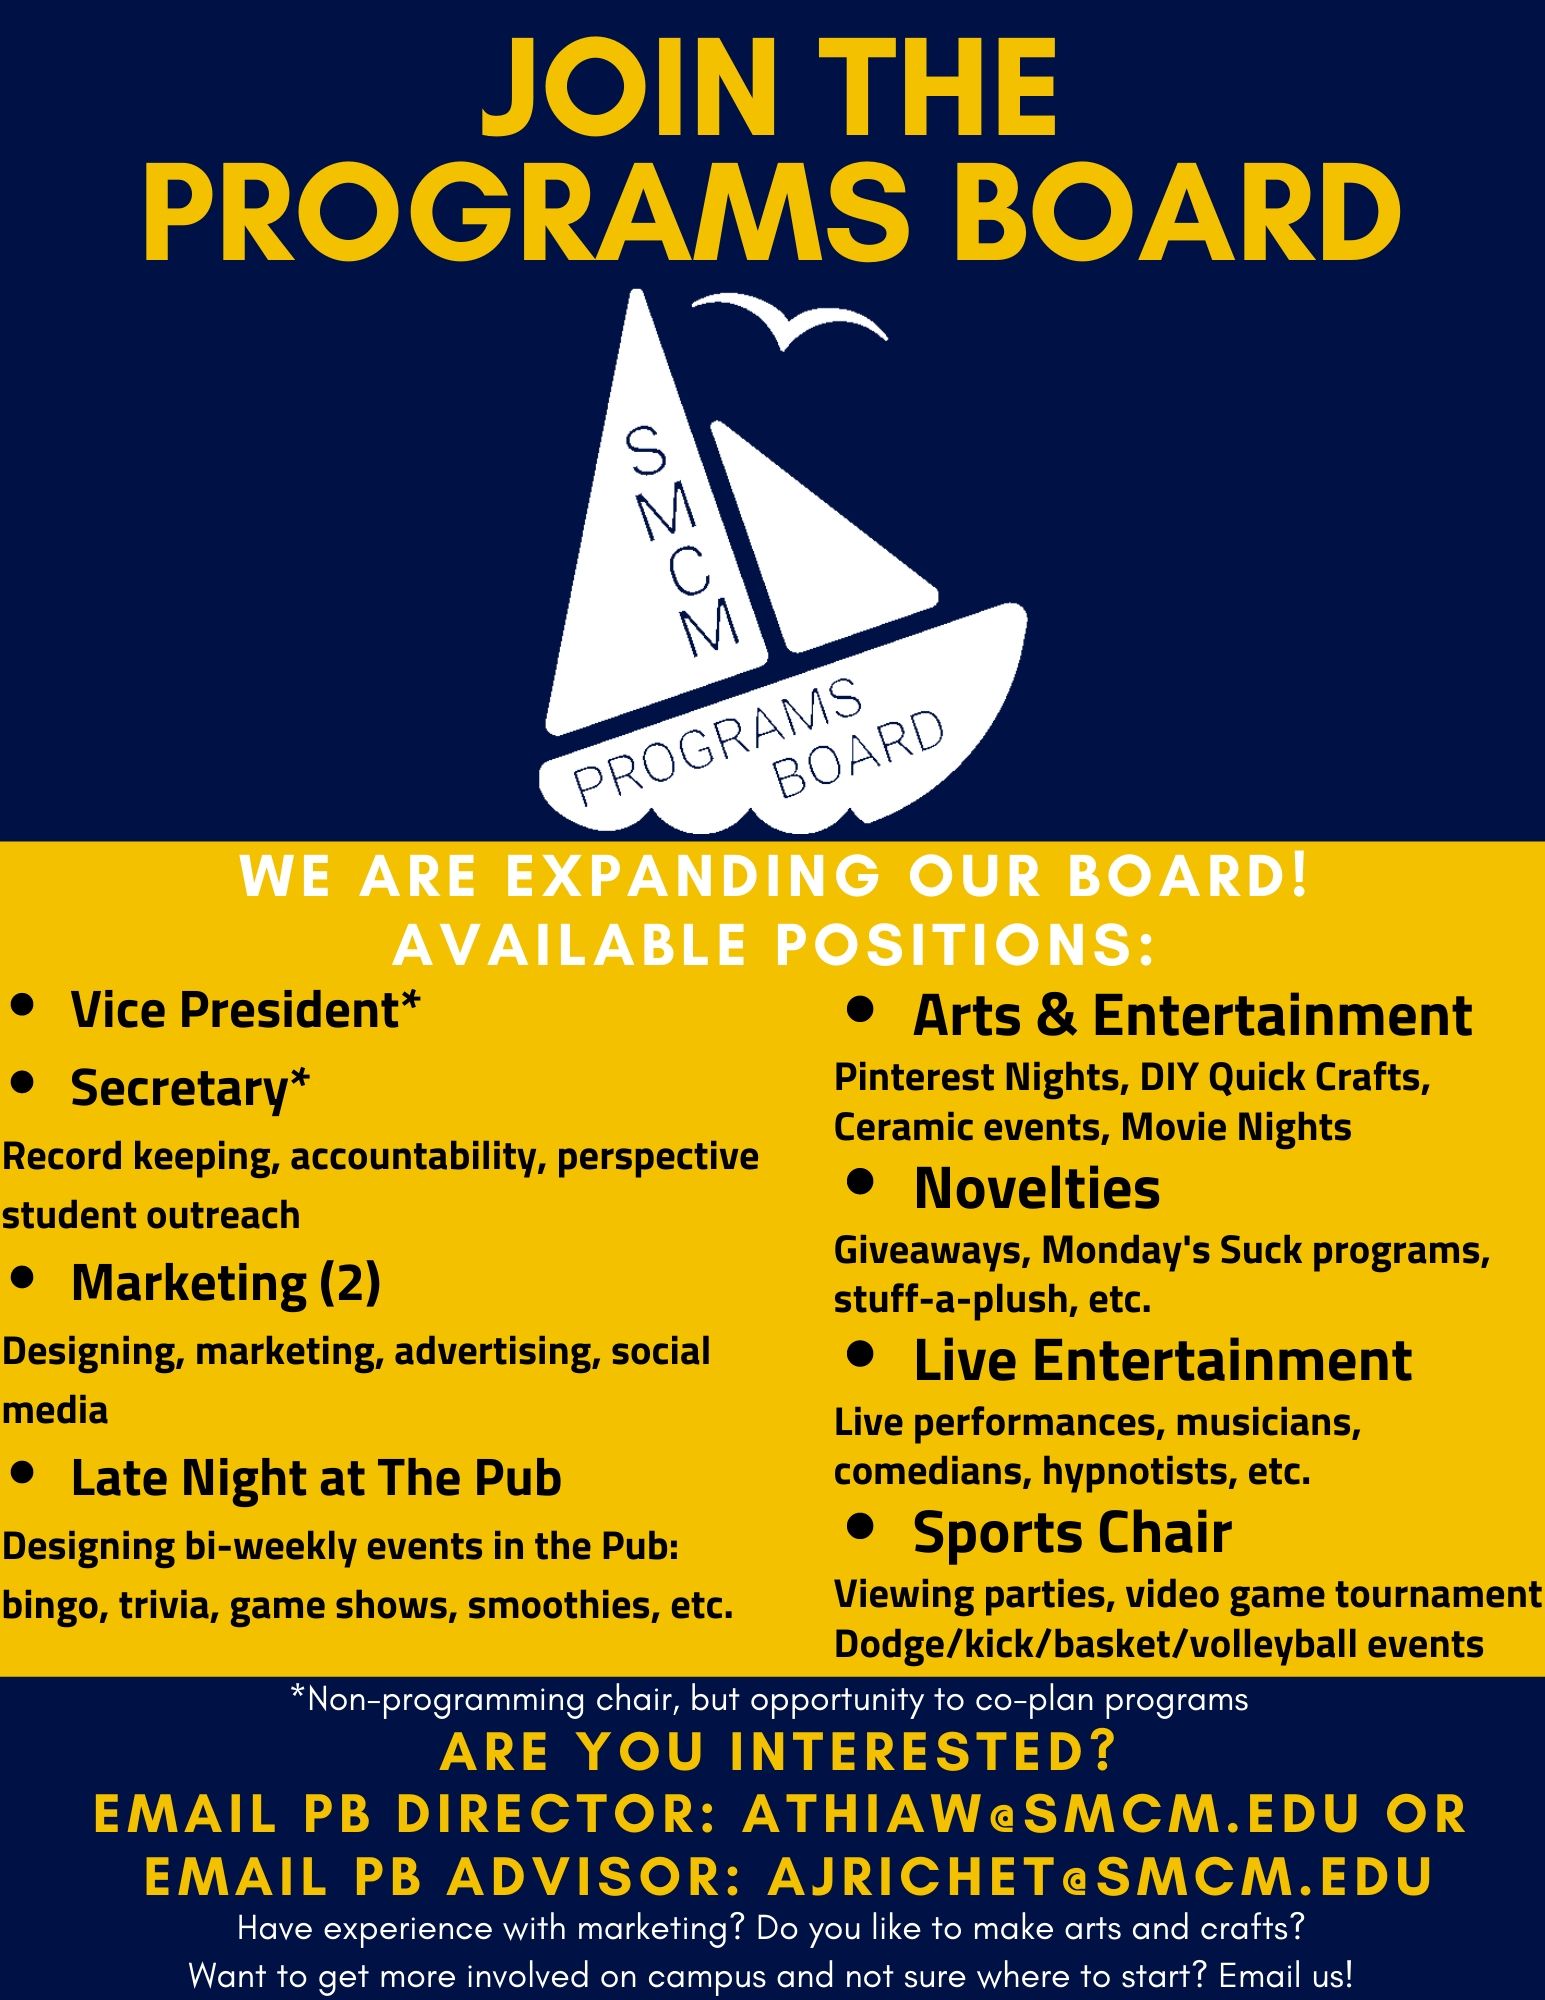 Join Programs Board- positions available for 2020-2021. Contact PB director athiaw@smcm.edu or PB advisor ajrichet@smcm.edu 